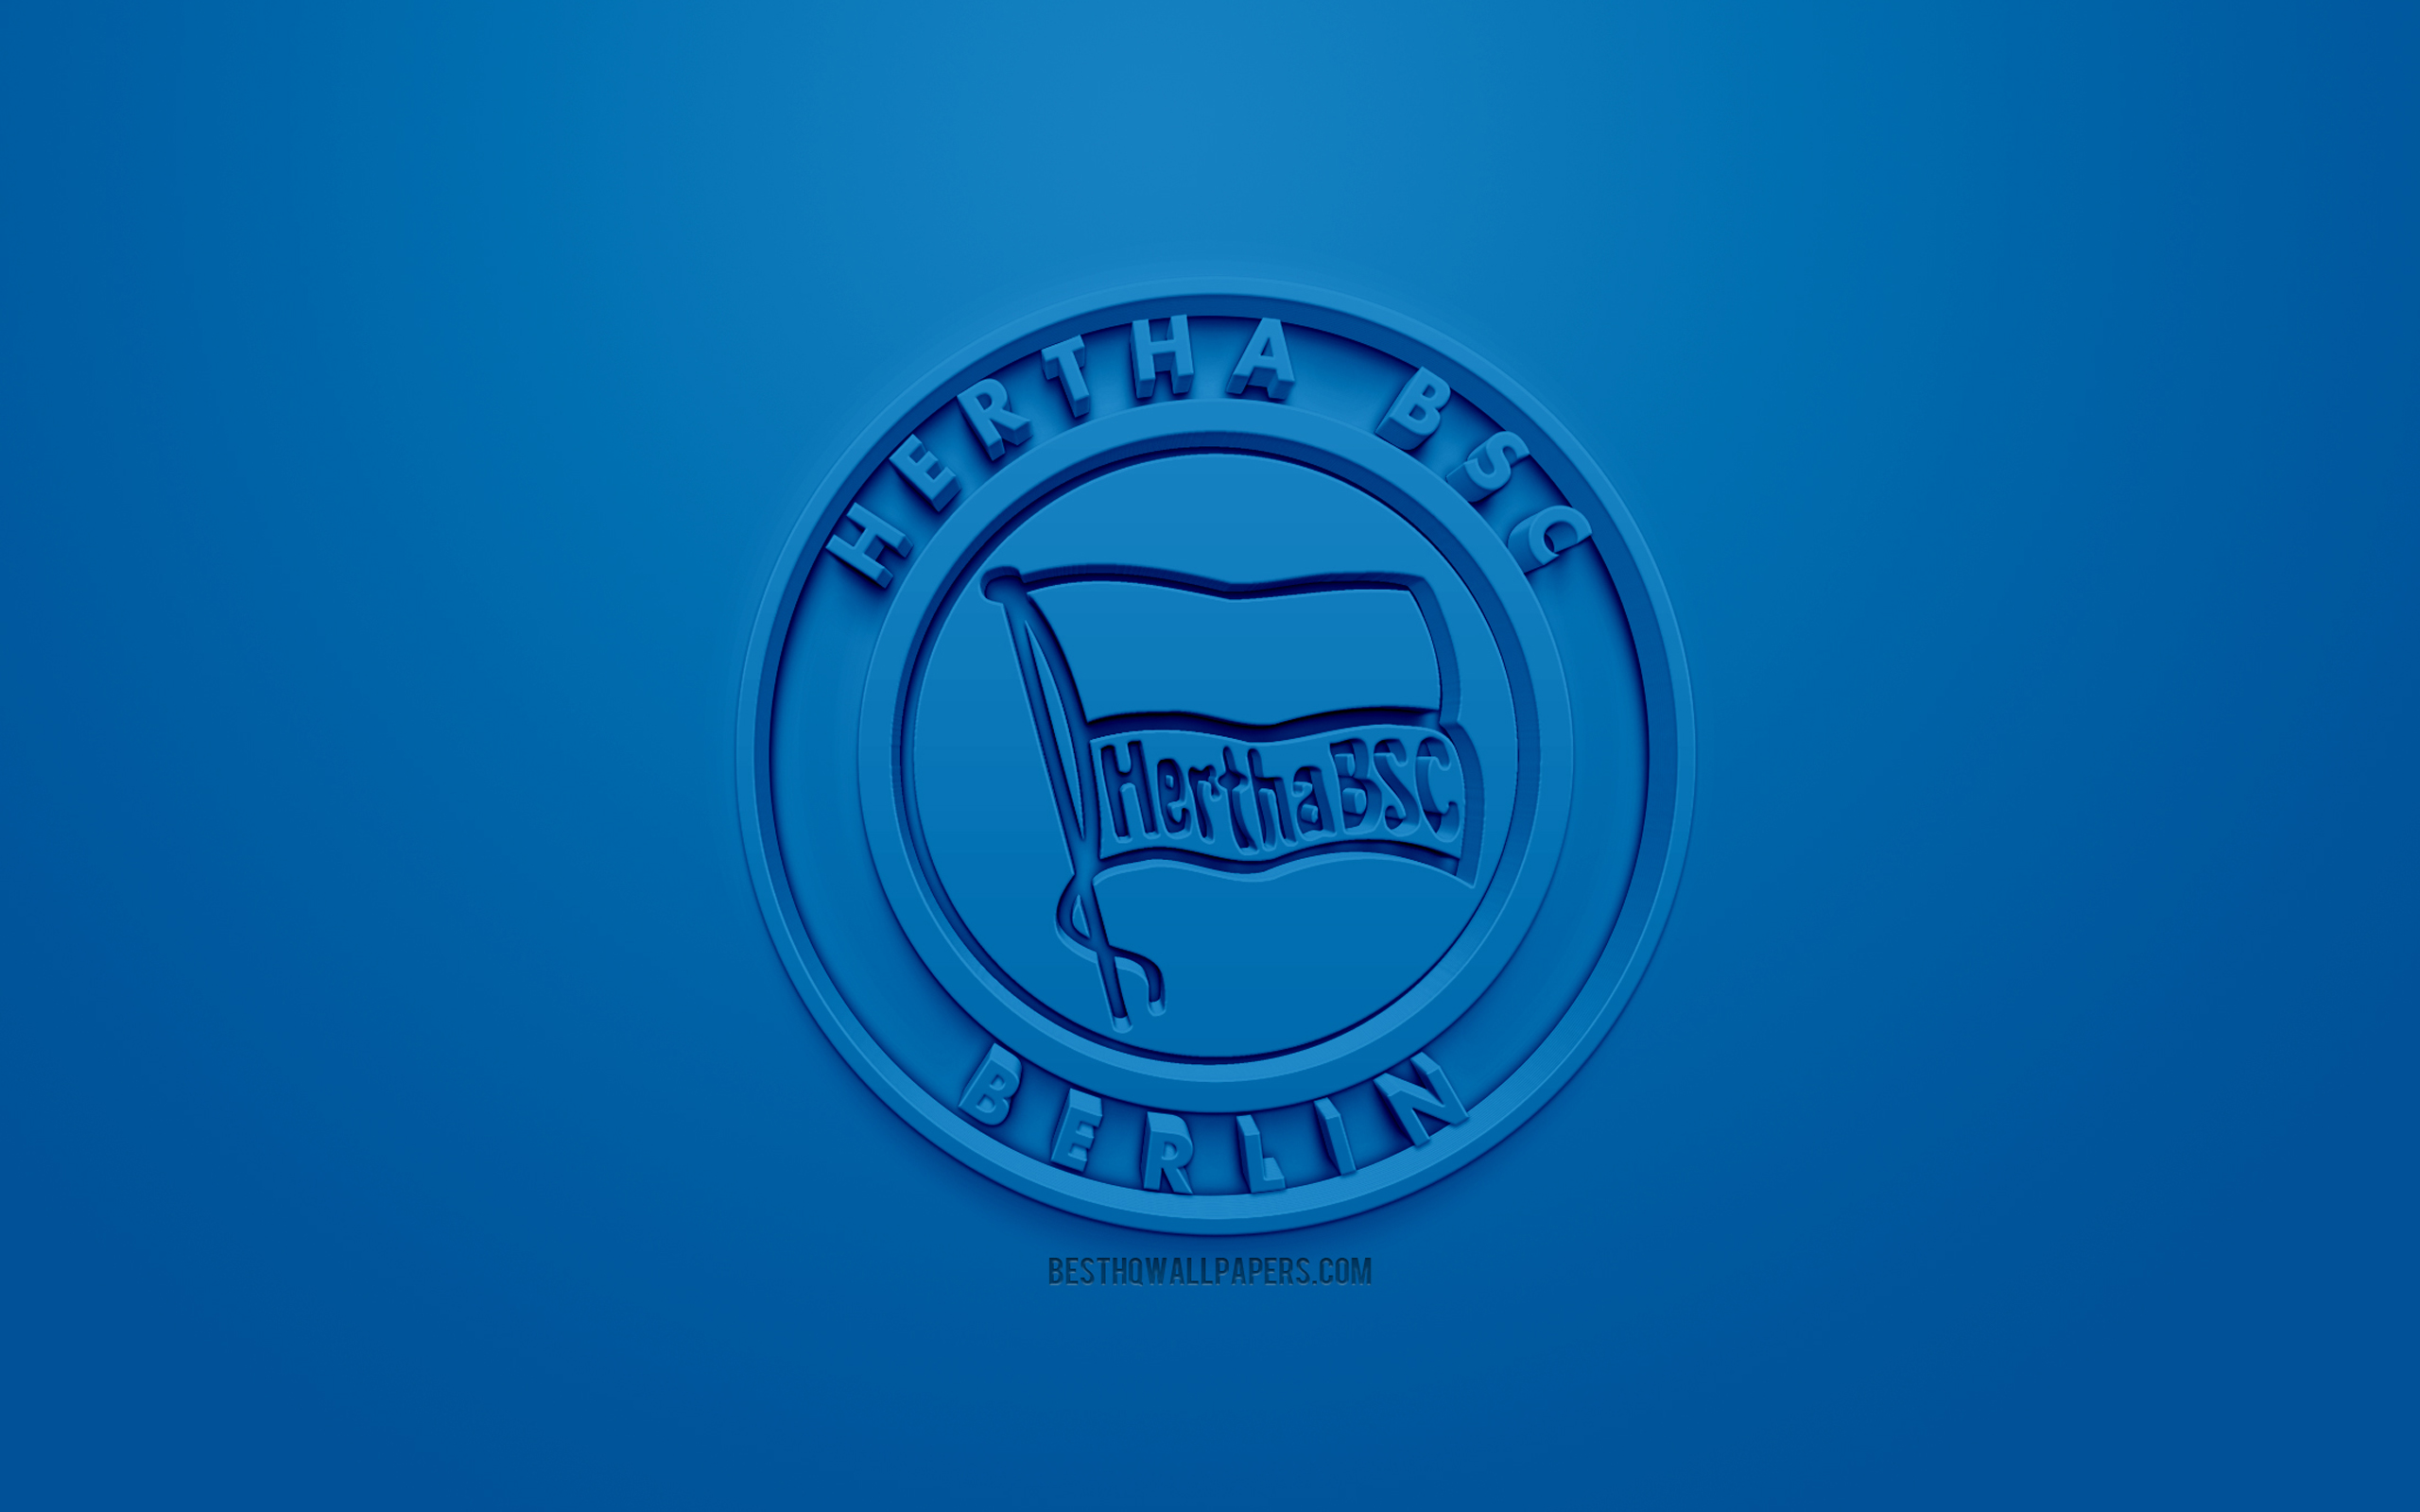 Wallpaper Hertha Bsc Creative 3d Logo Blue Background